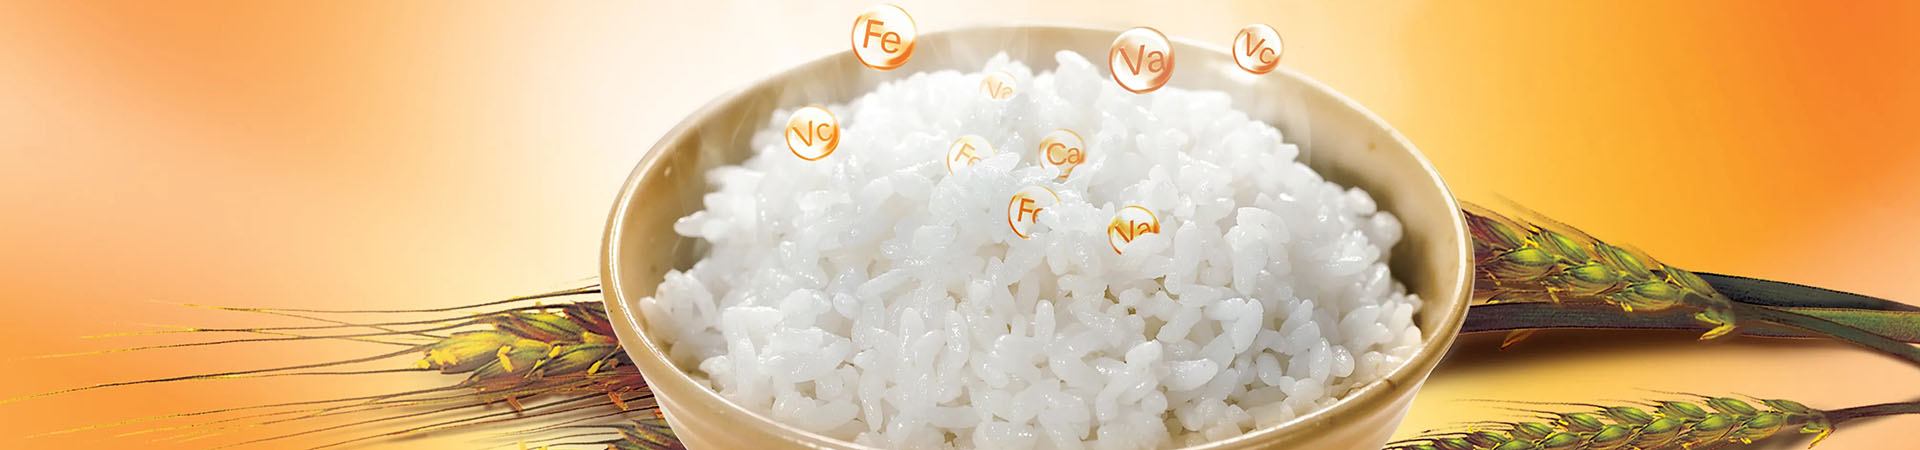 54 Units Mini Rice Destoner To Be Dispatched to Nigeria